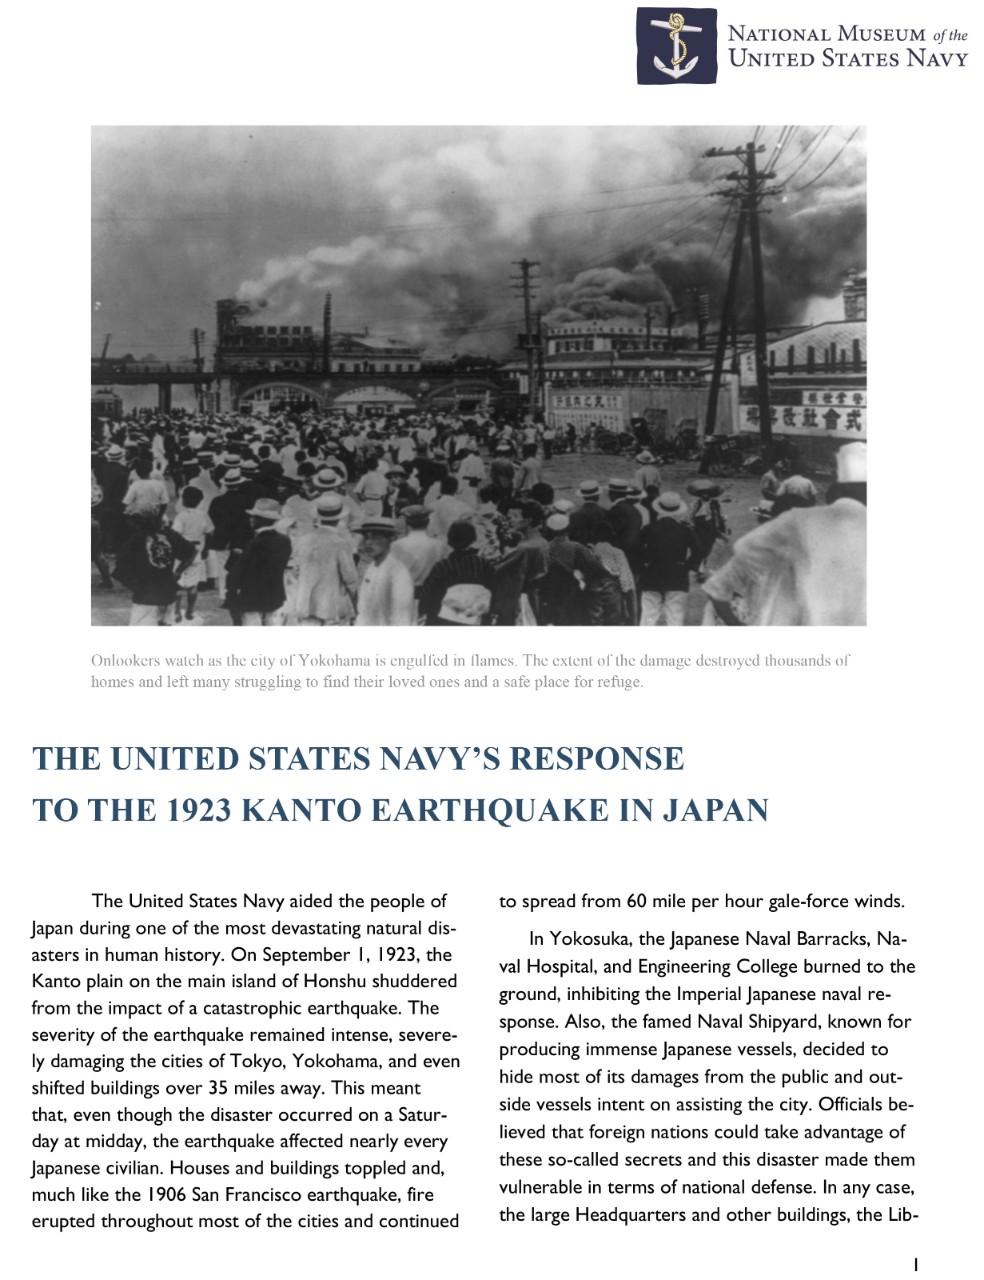 NMUSN_United States Response to 1923 Kanto Earthquake_JPG